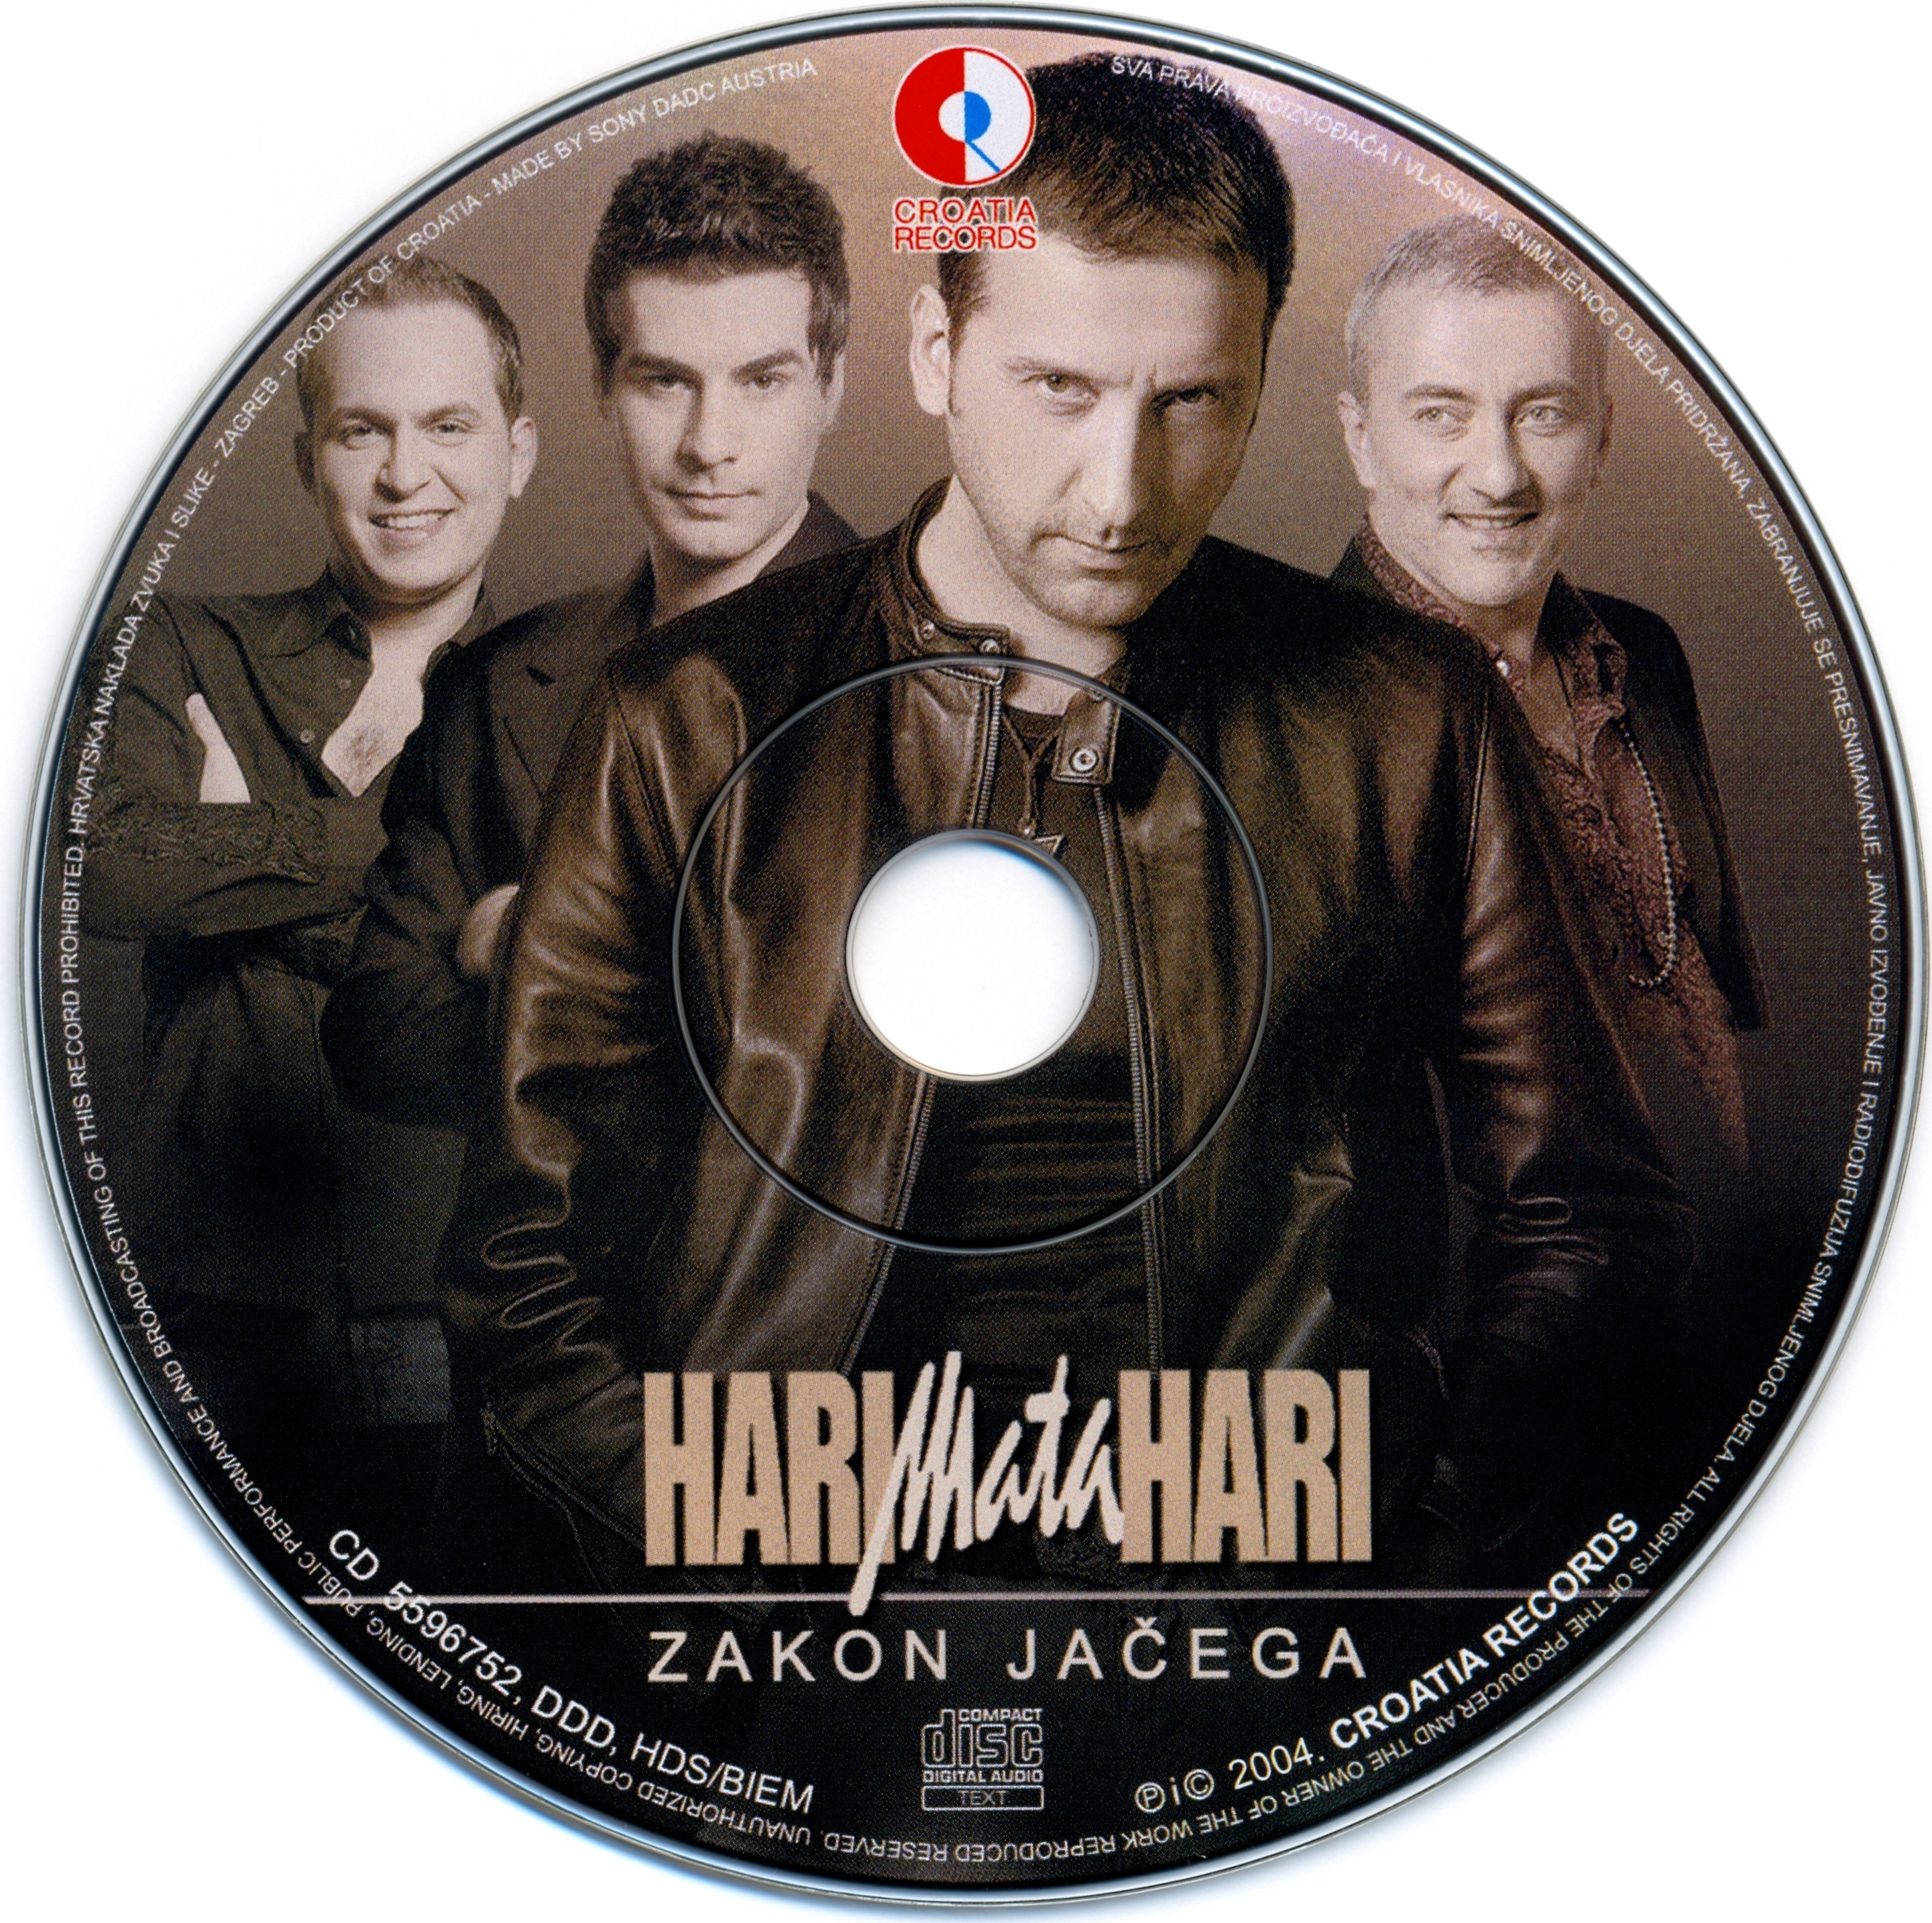 Hari Mata Hari Zakon jacega 2004 cd